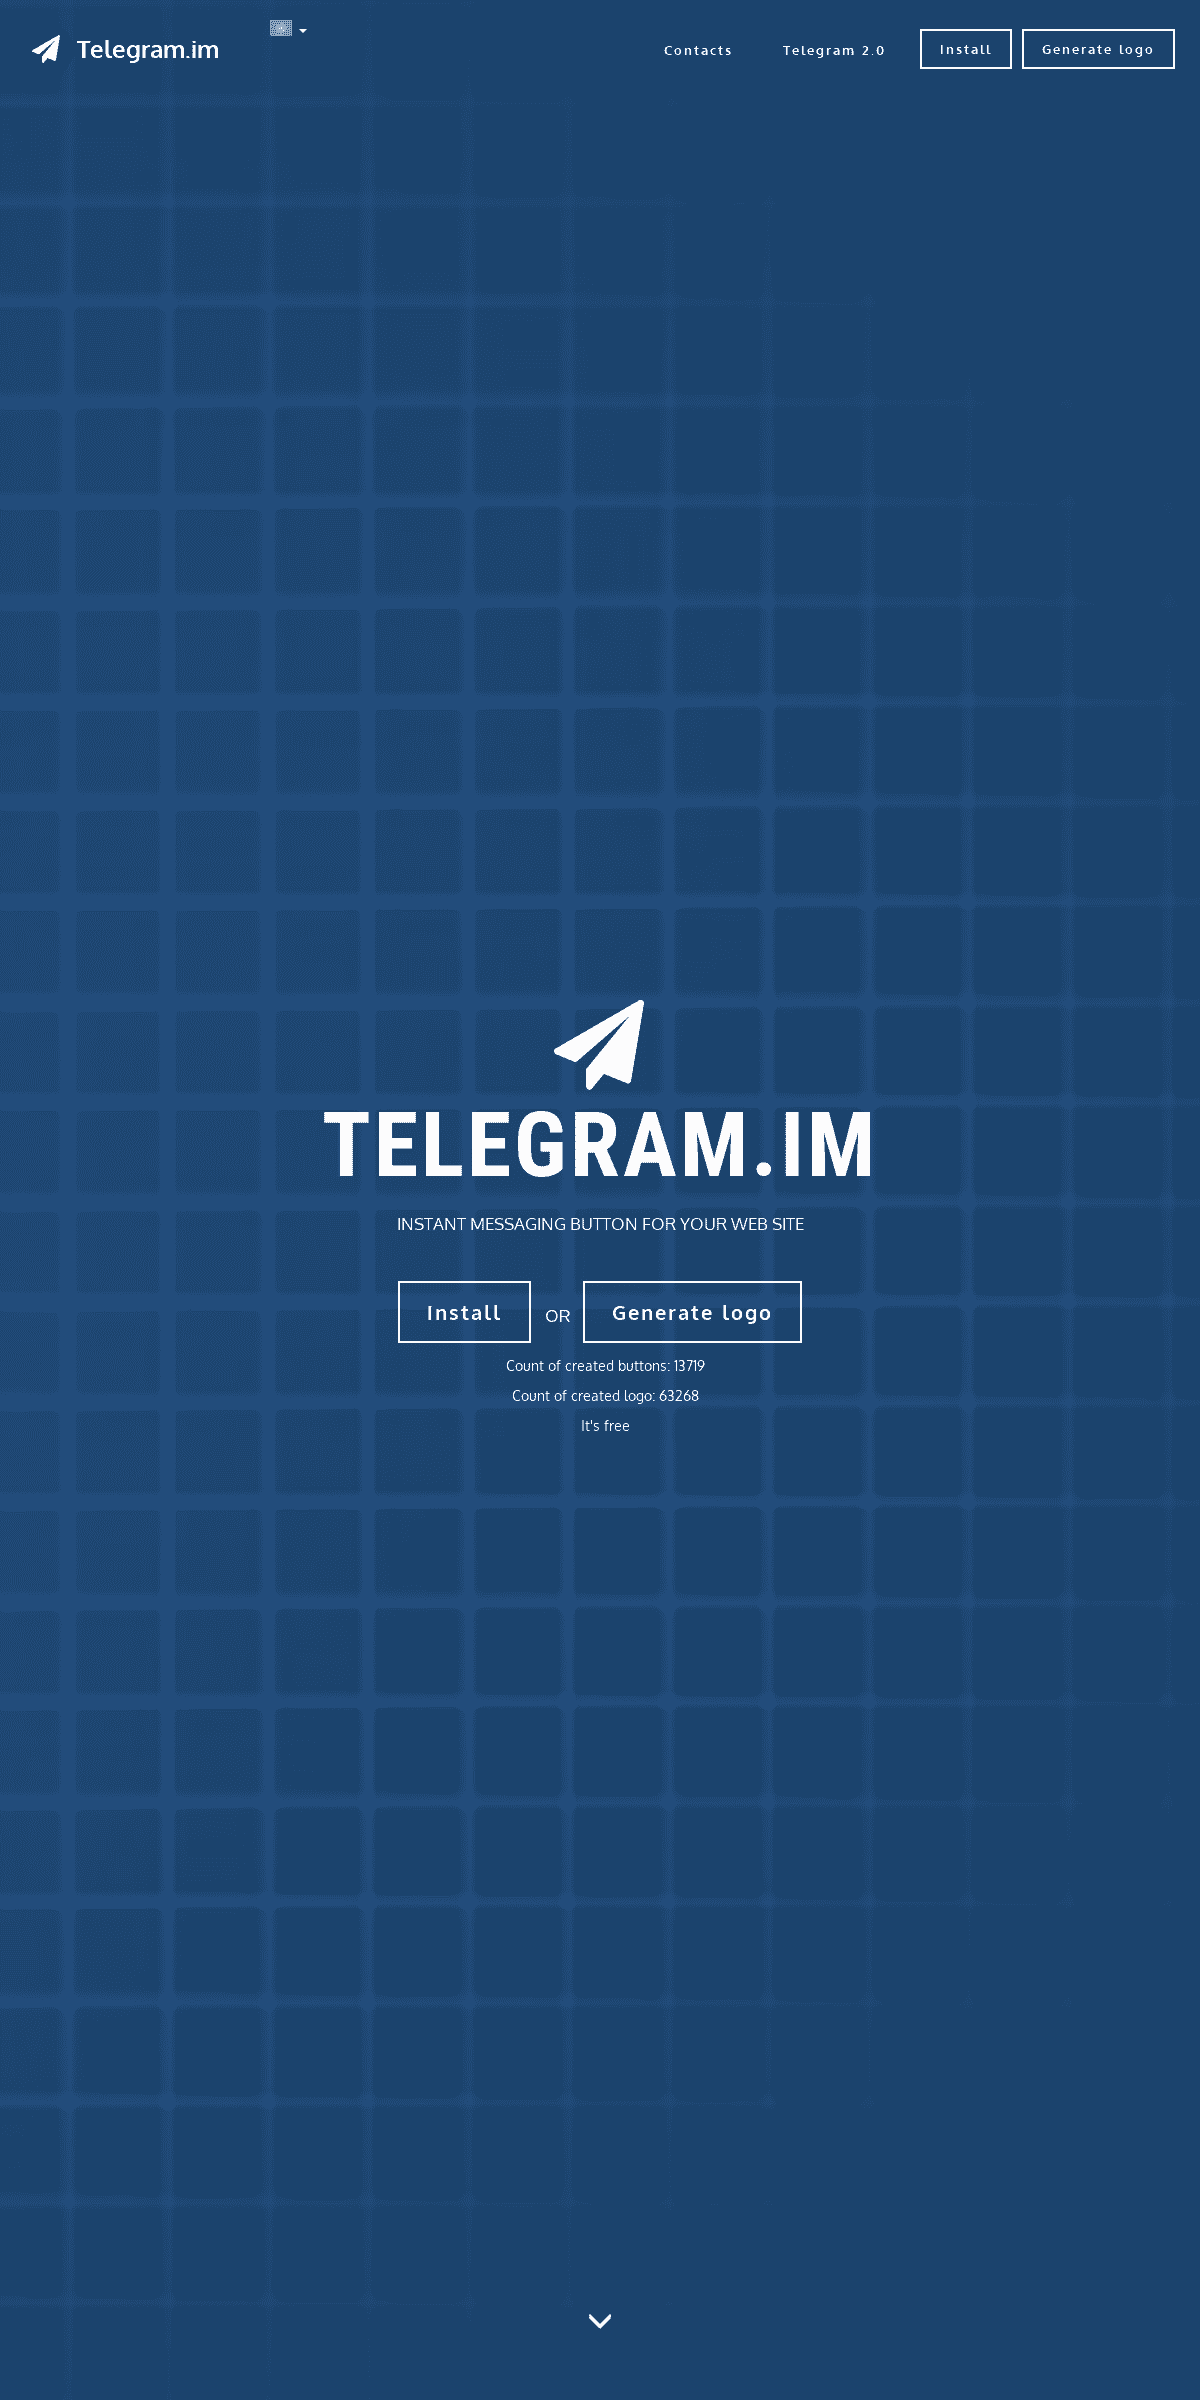 A complete backup of telegram.im